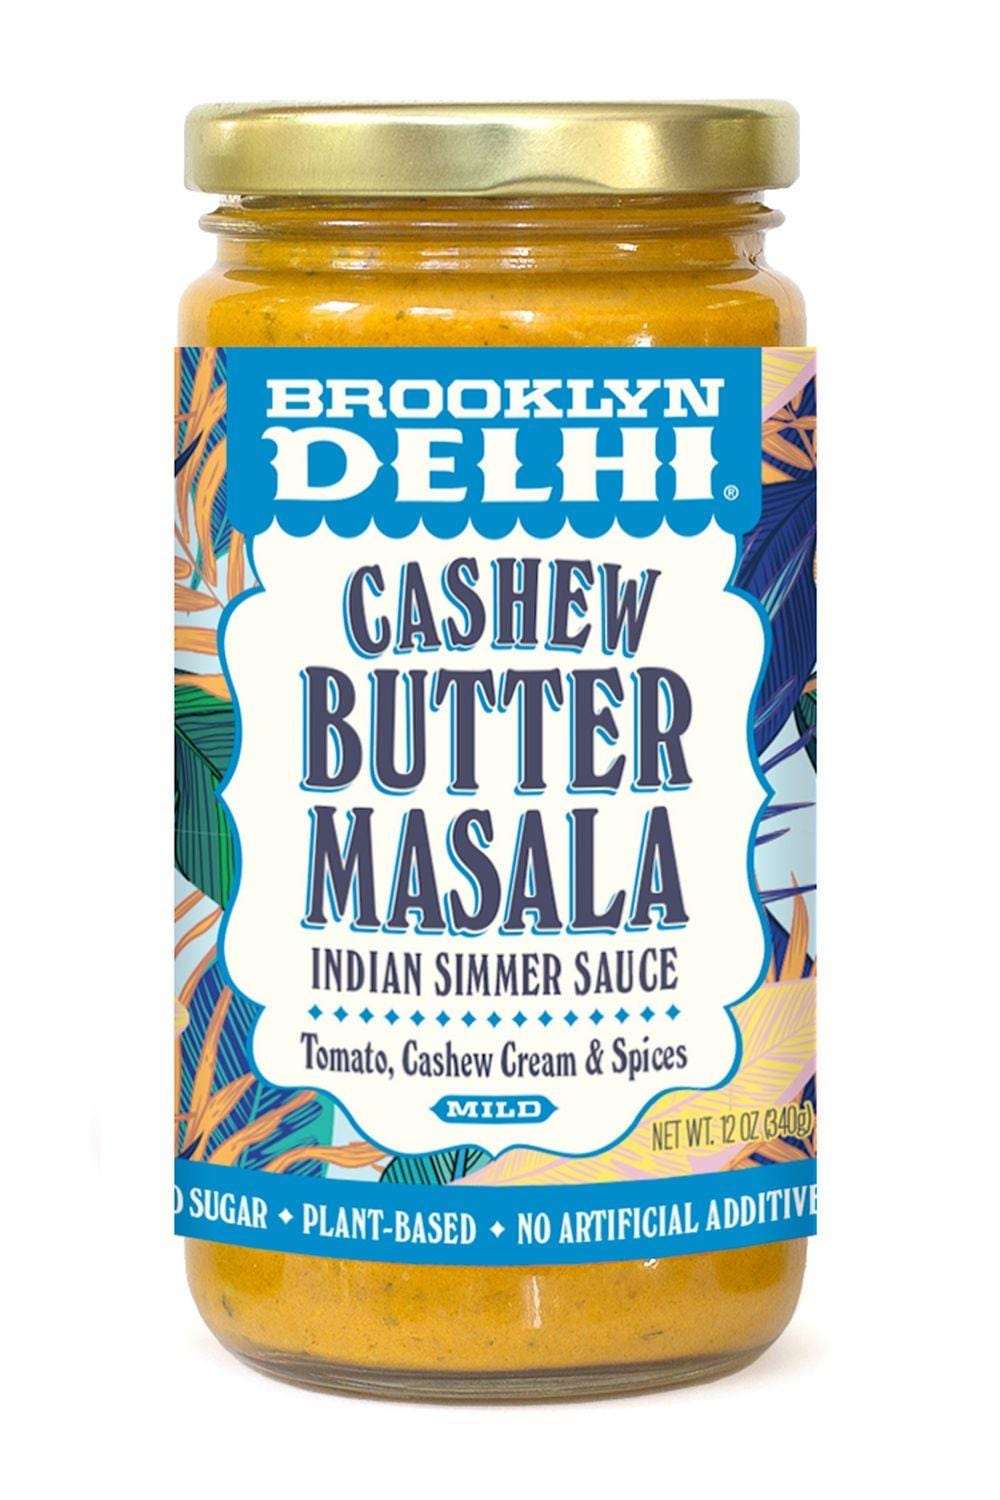 Masala Butter Cashew Sauce 354ml
Brooklyn Delhi